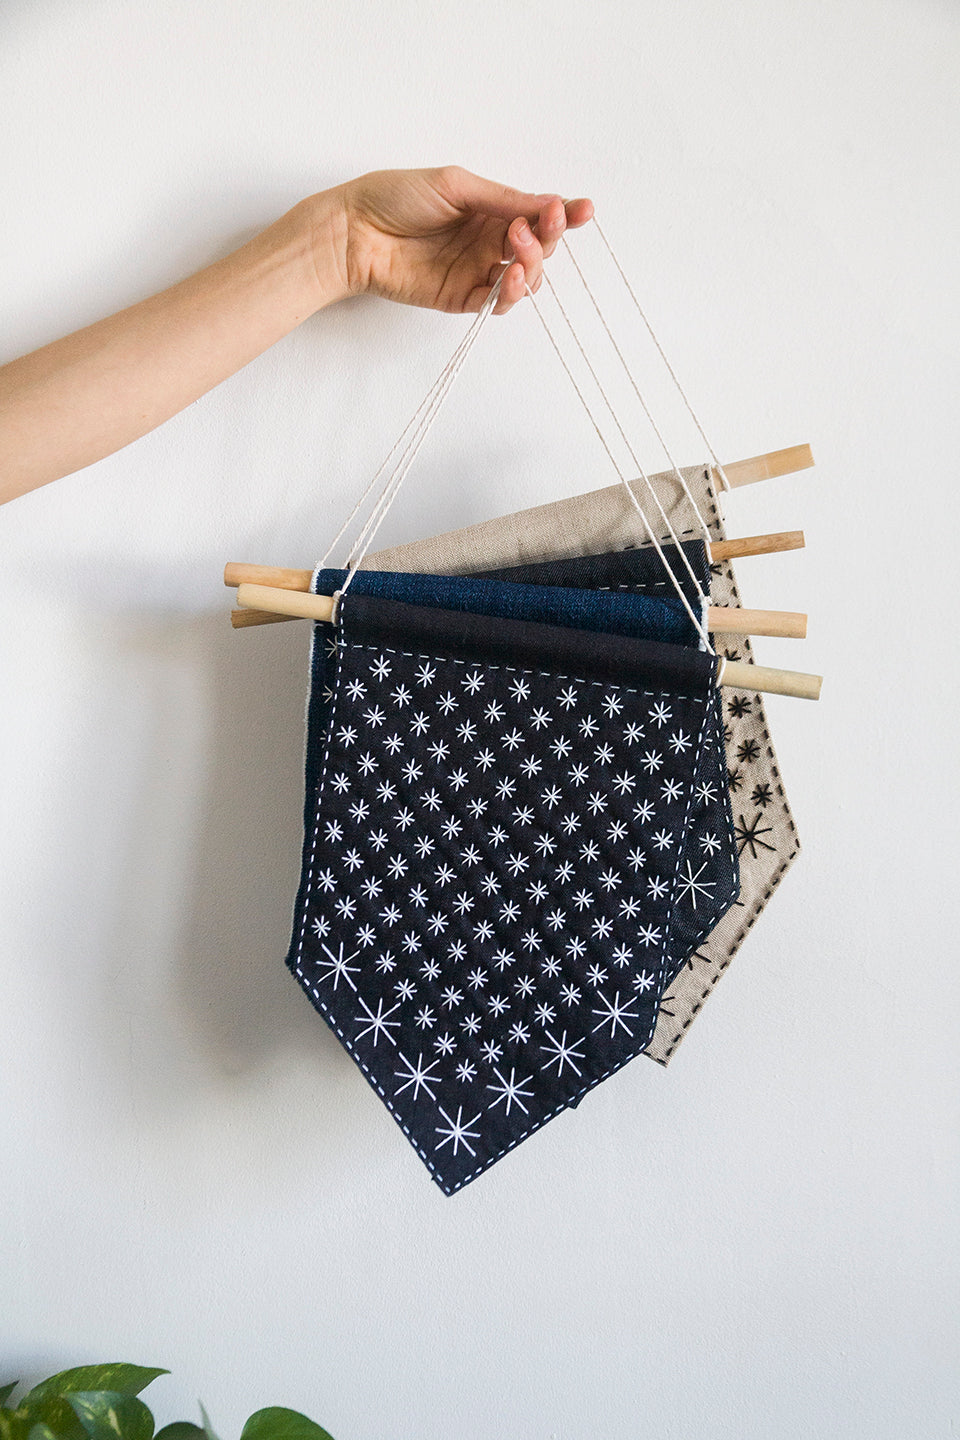 New DIY Kit! Make your own Starry Sashiko Banner